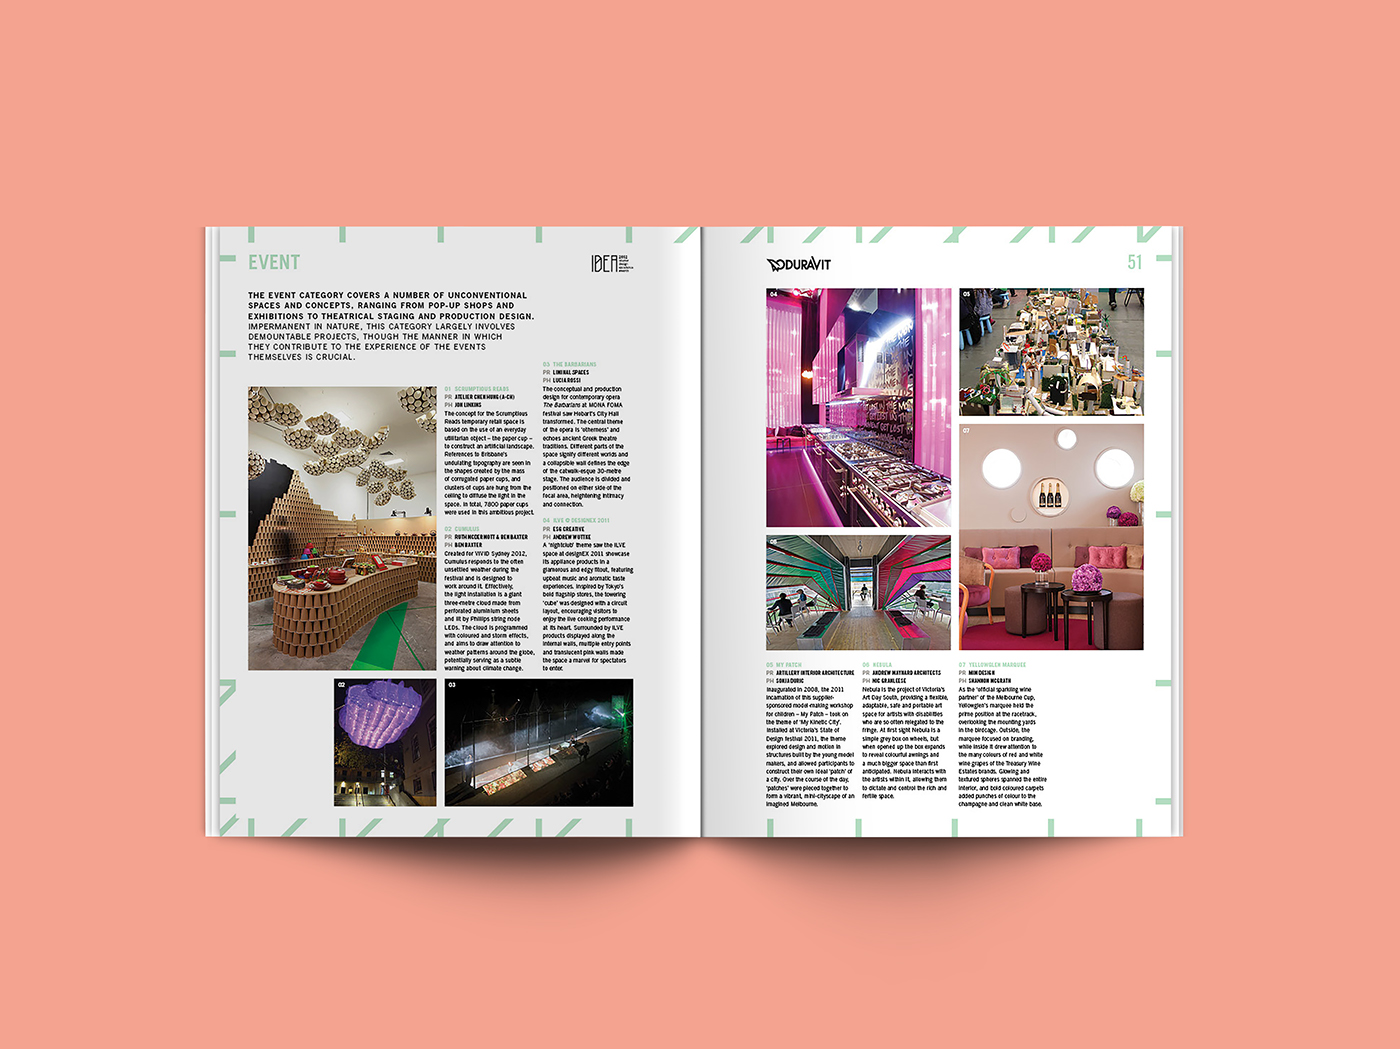 idea awards  interior design  inside magazine  melbourne  australia  Marlo Guanlao (inside)